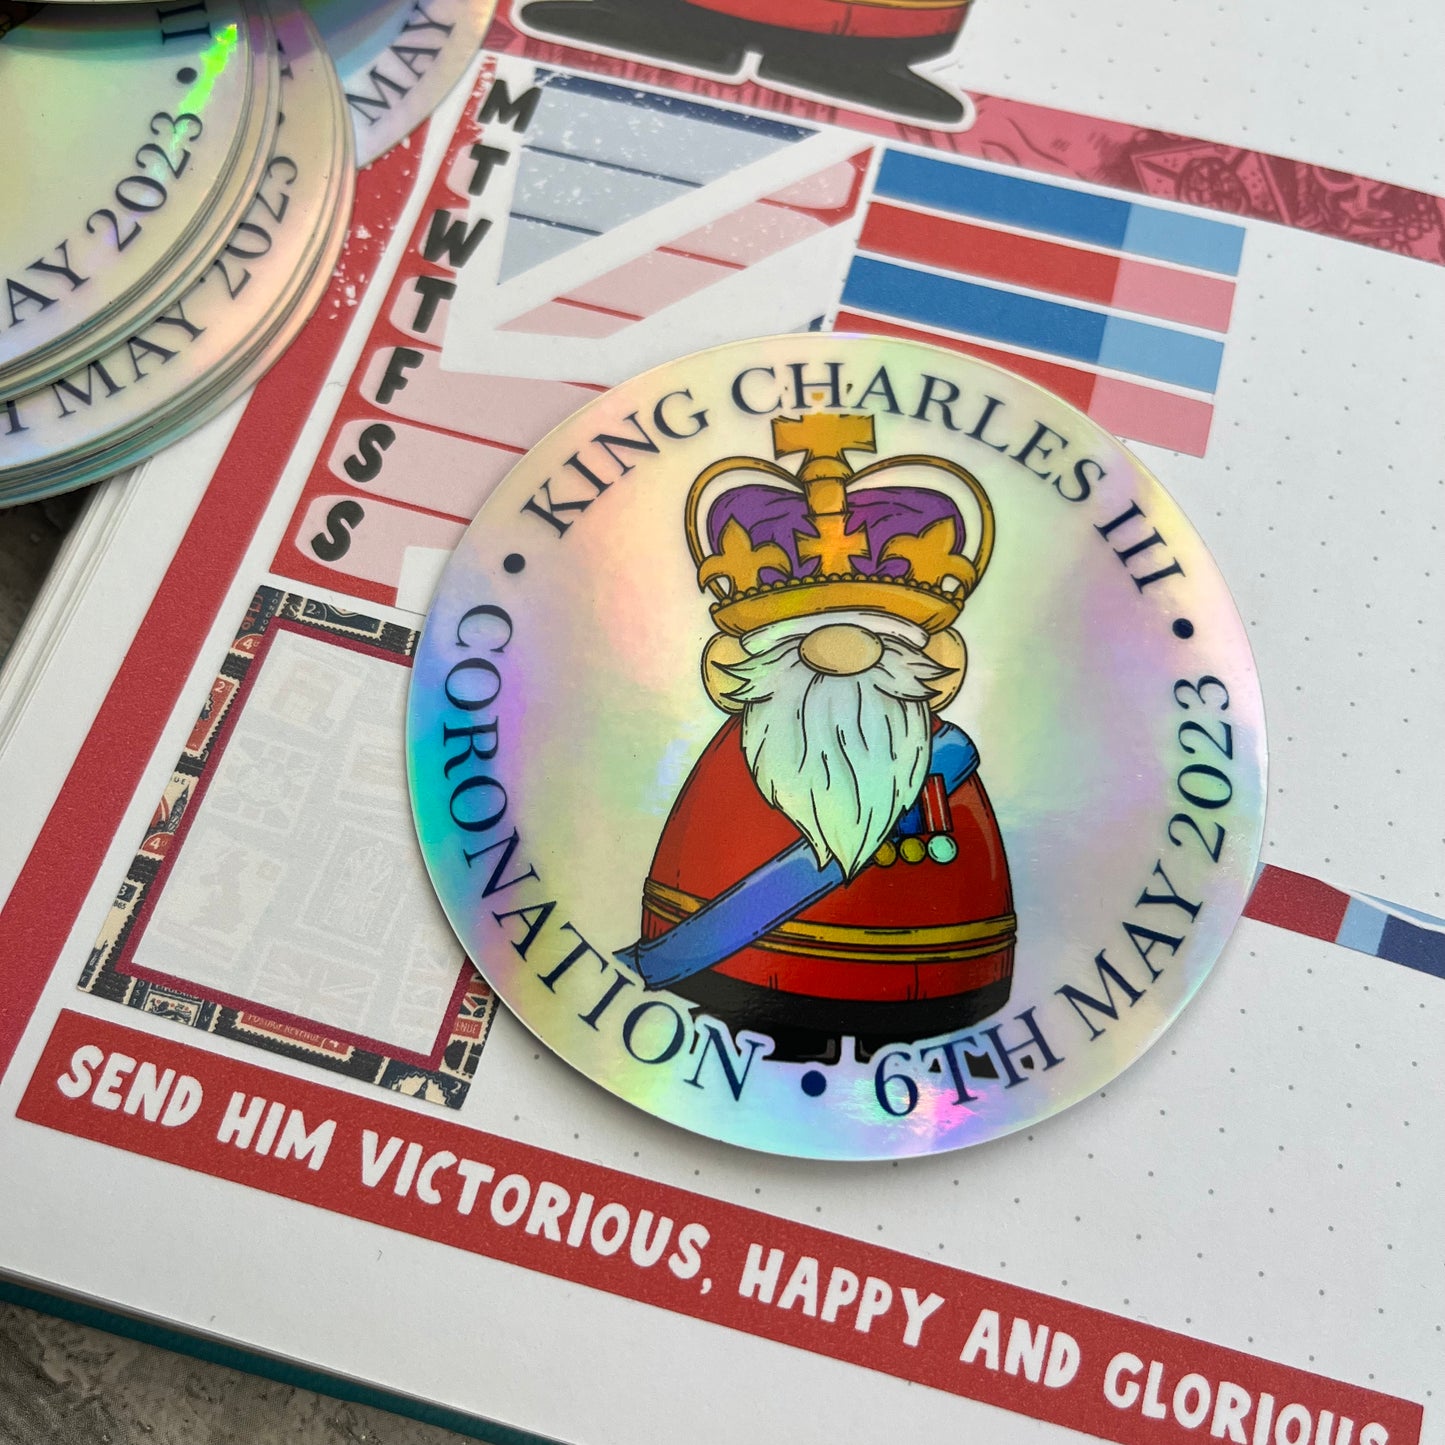 Holographic Vinyl Sticker - King Charles Coronation